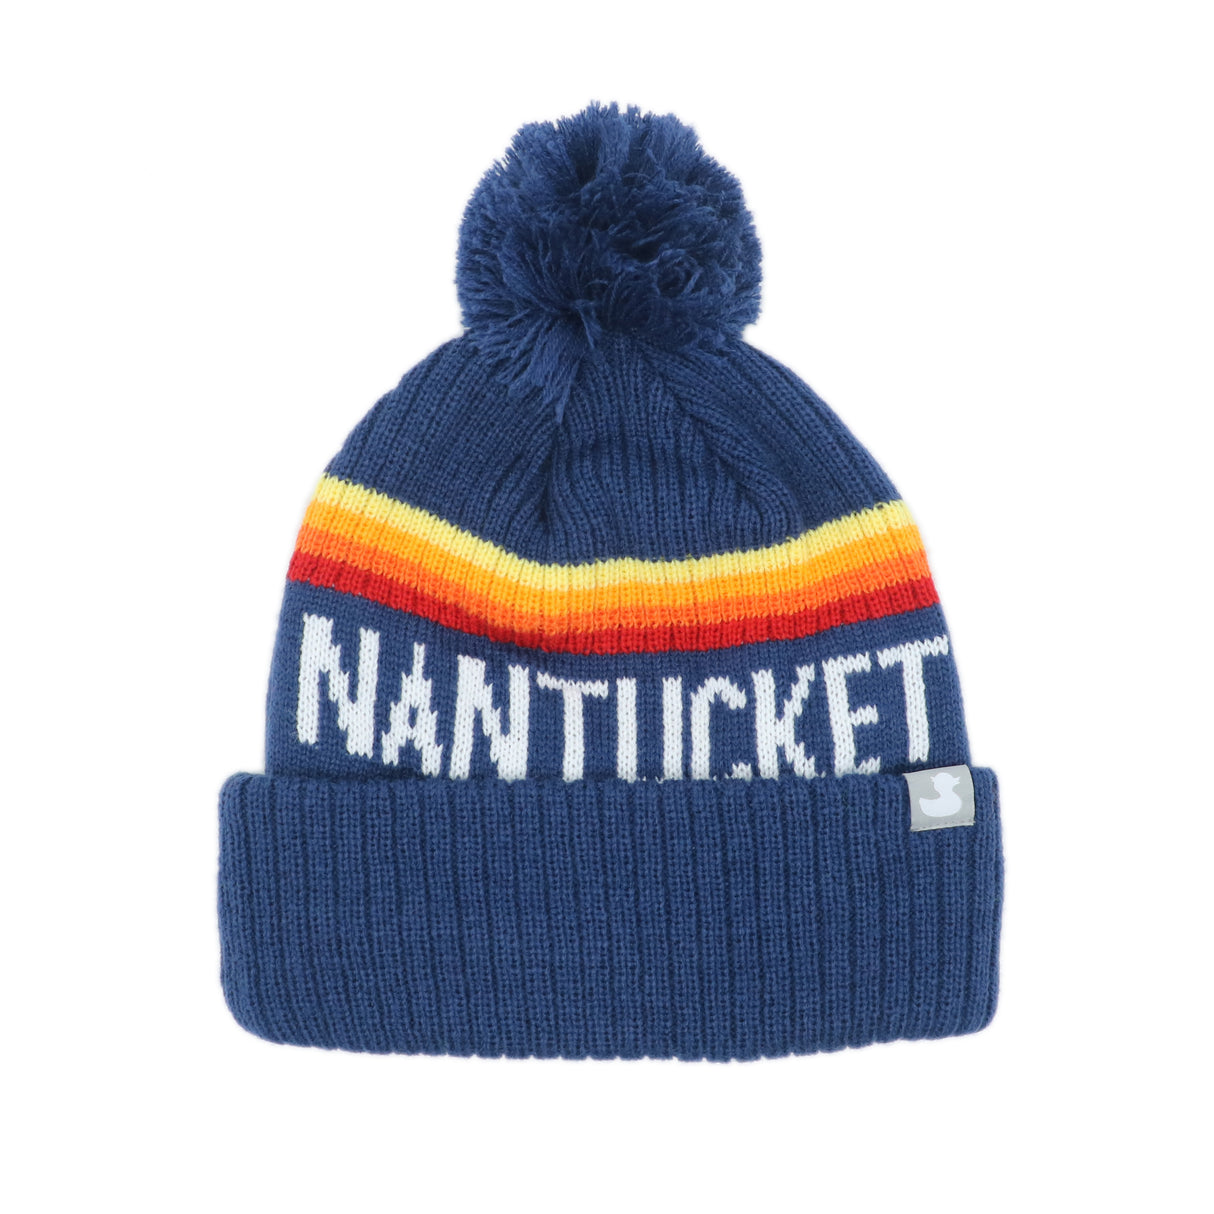 2024 Adams: Nantucket Winter Hat (Navy with Stripes)